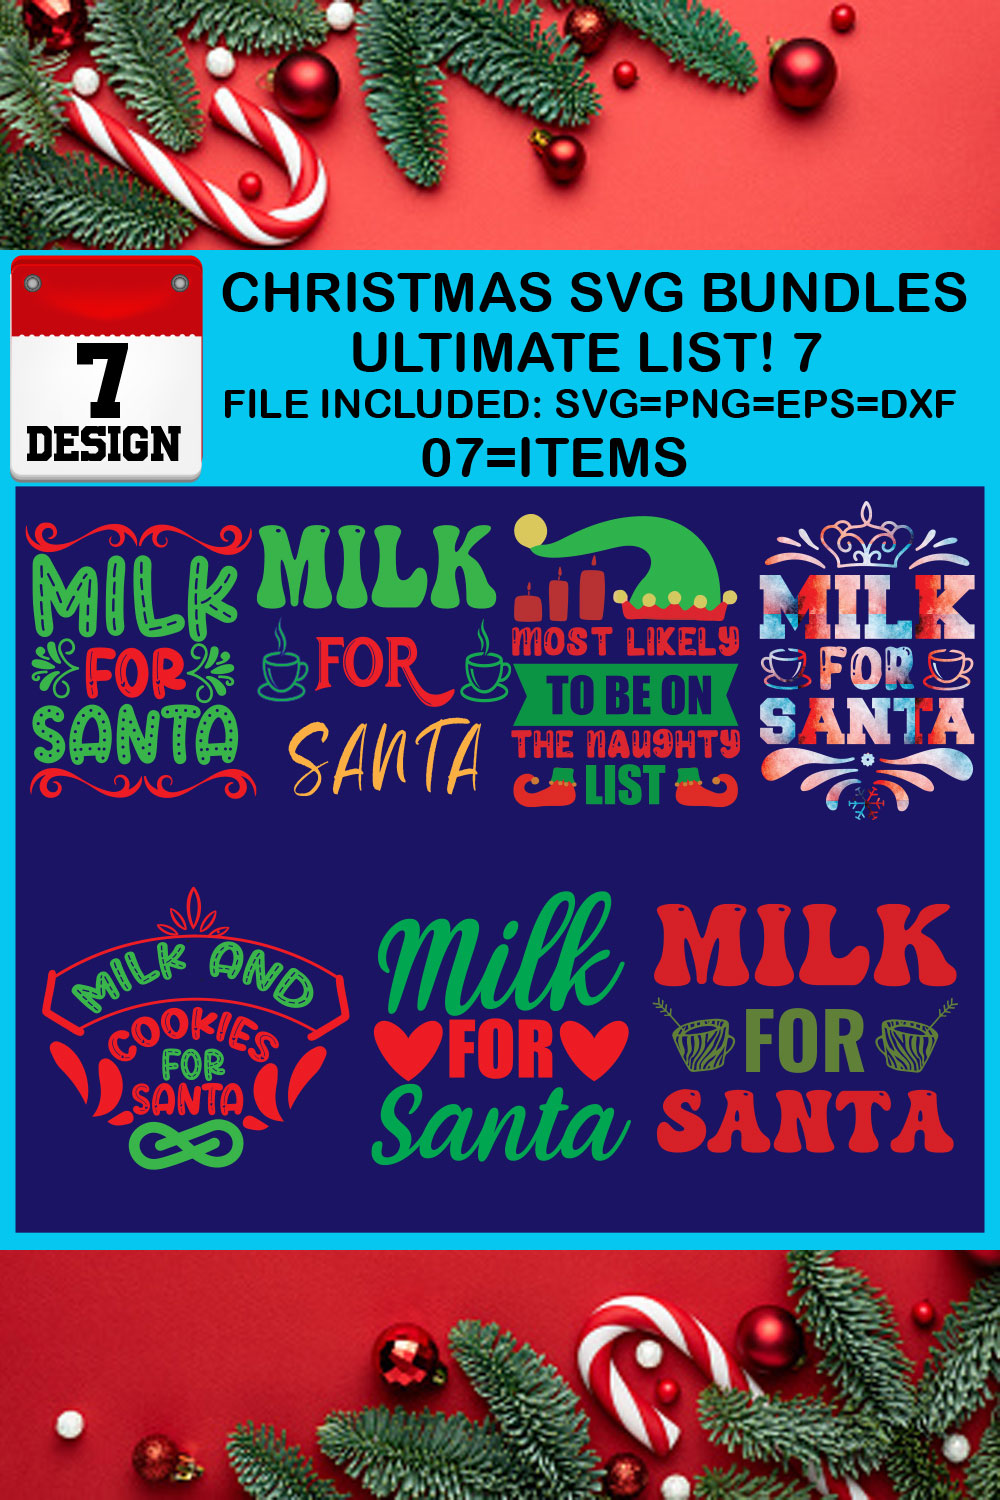 Free Ultimate List! 7 Christmas SVG Bundles pinterest preview image.